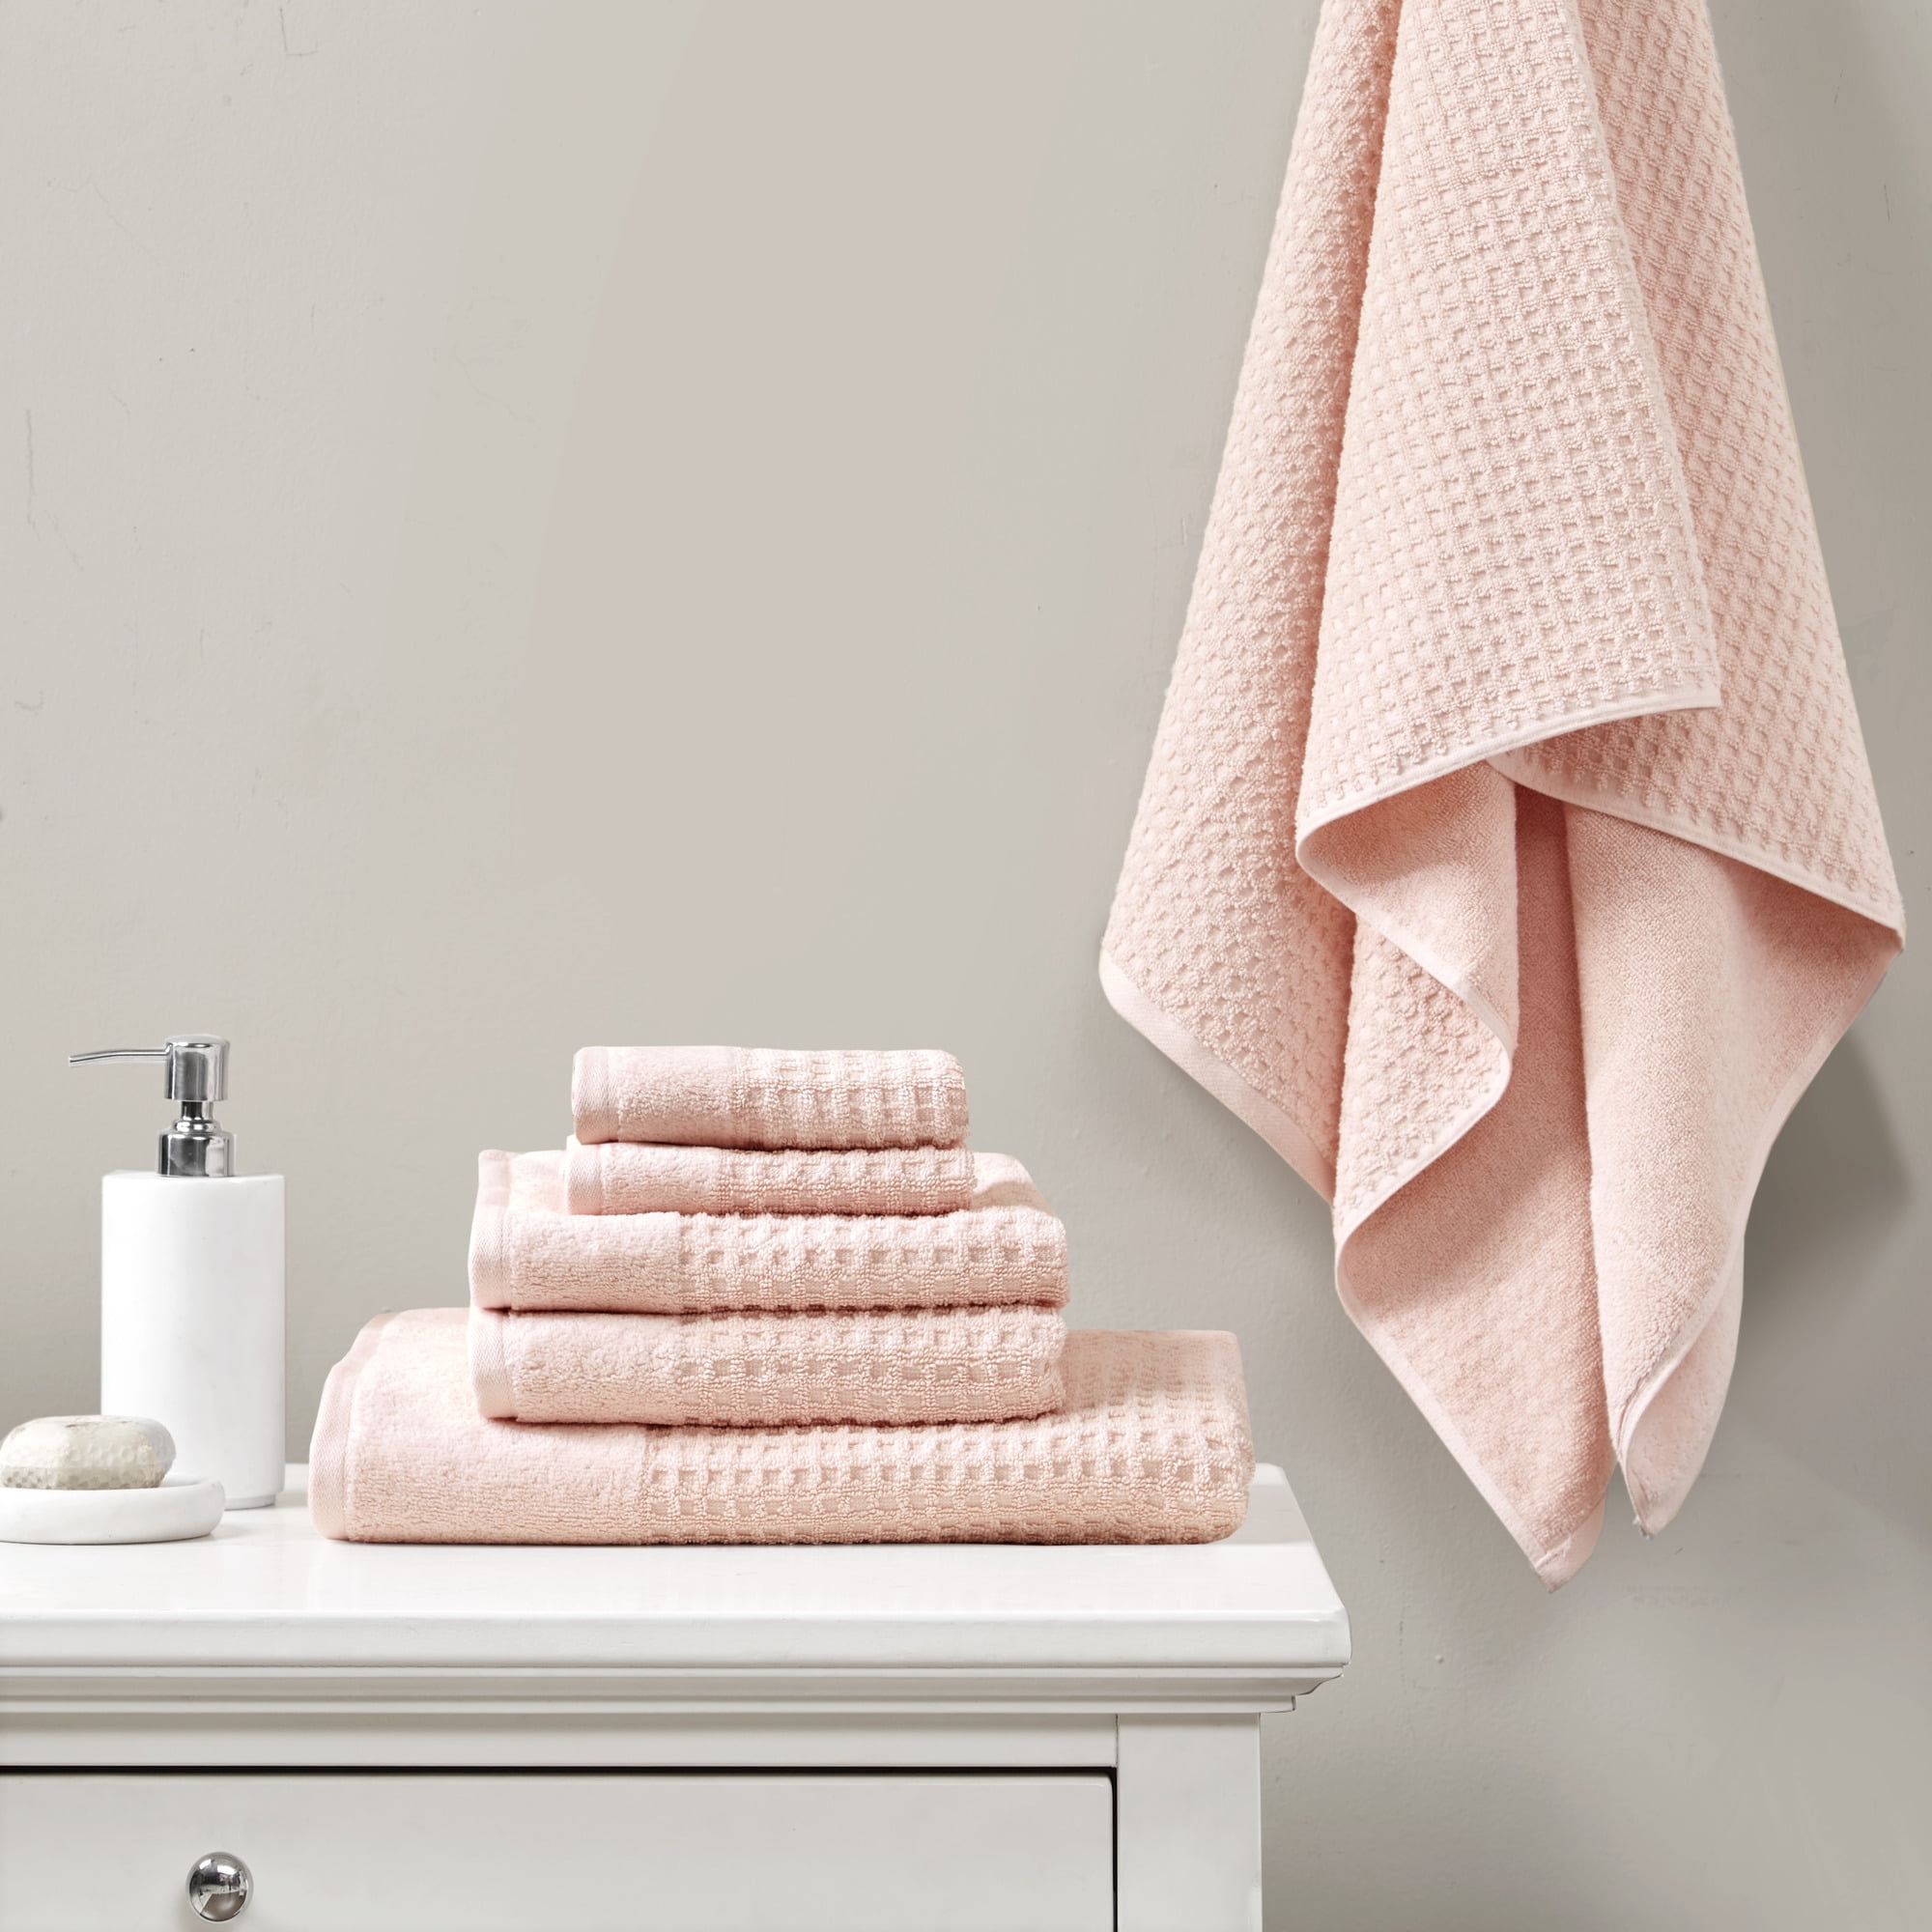 Home Spa Towel Set Pink Black Cotton Bath 2 Hand Washcloth 4 Piece